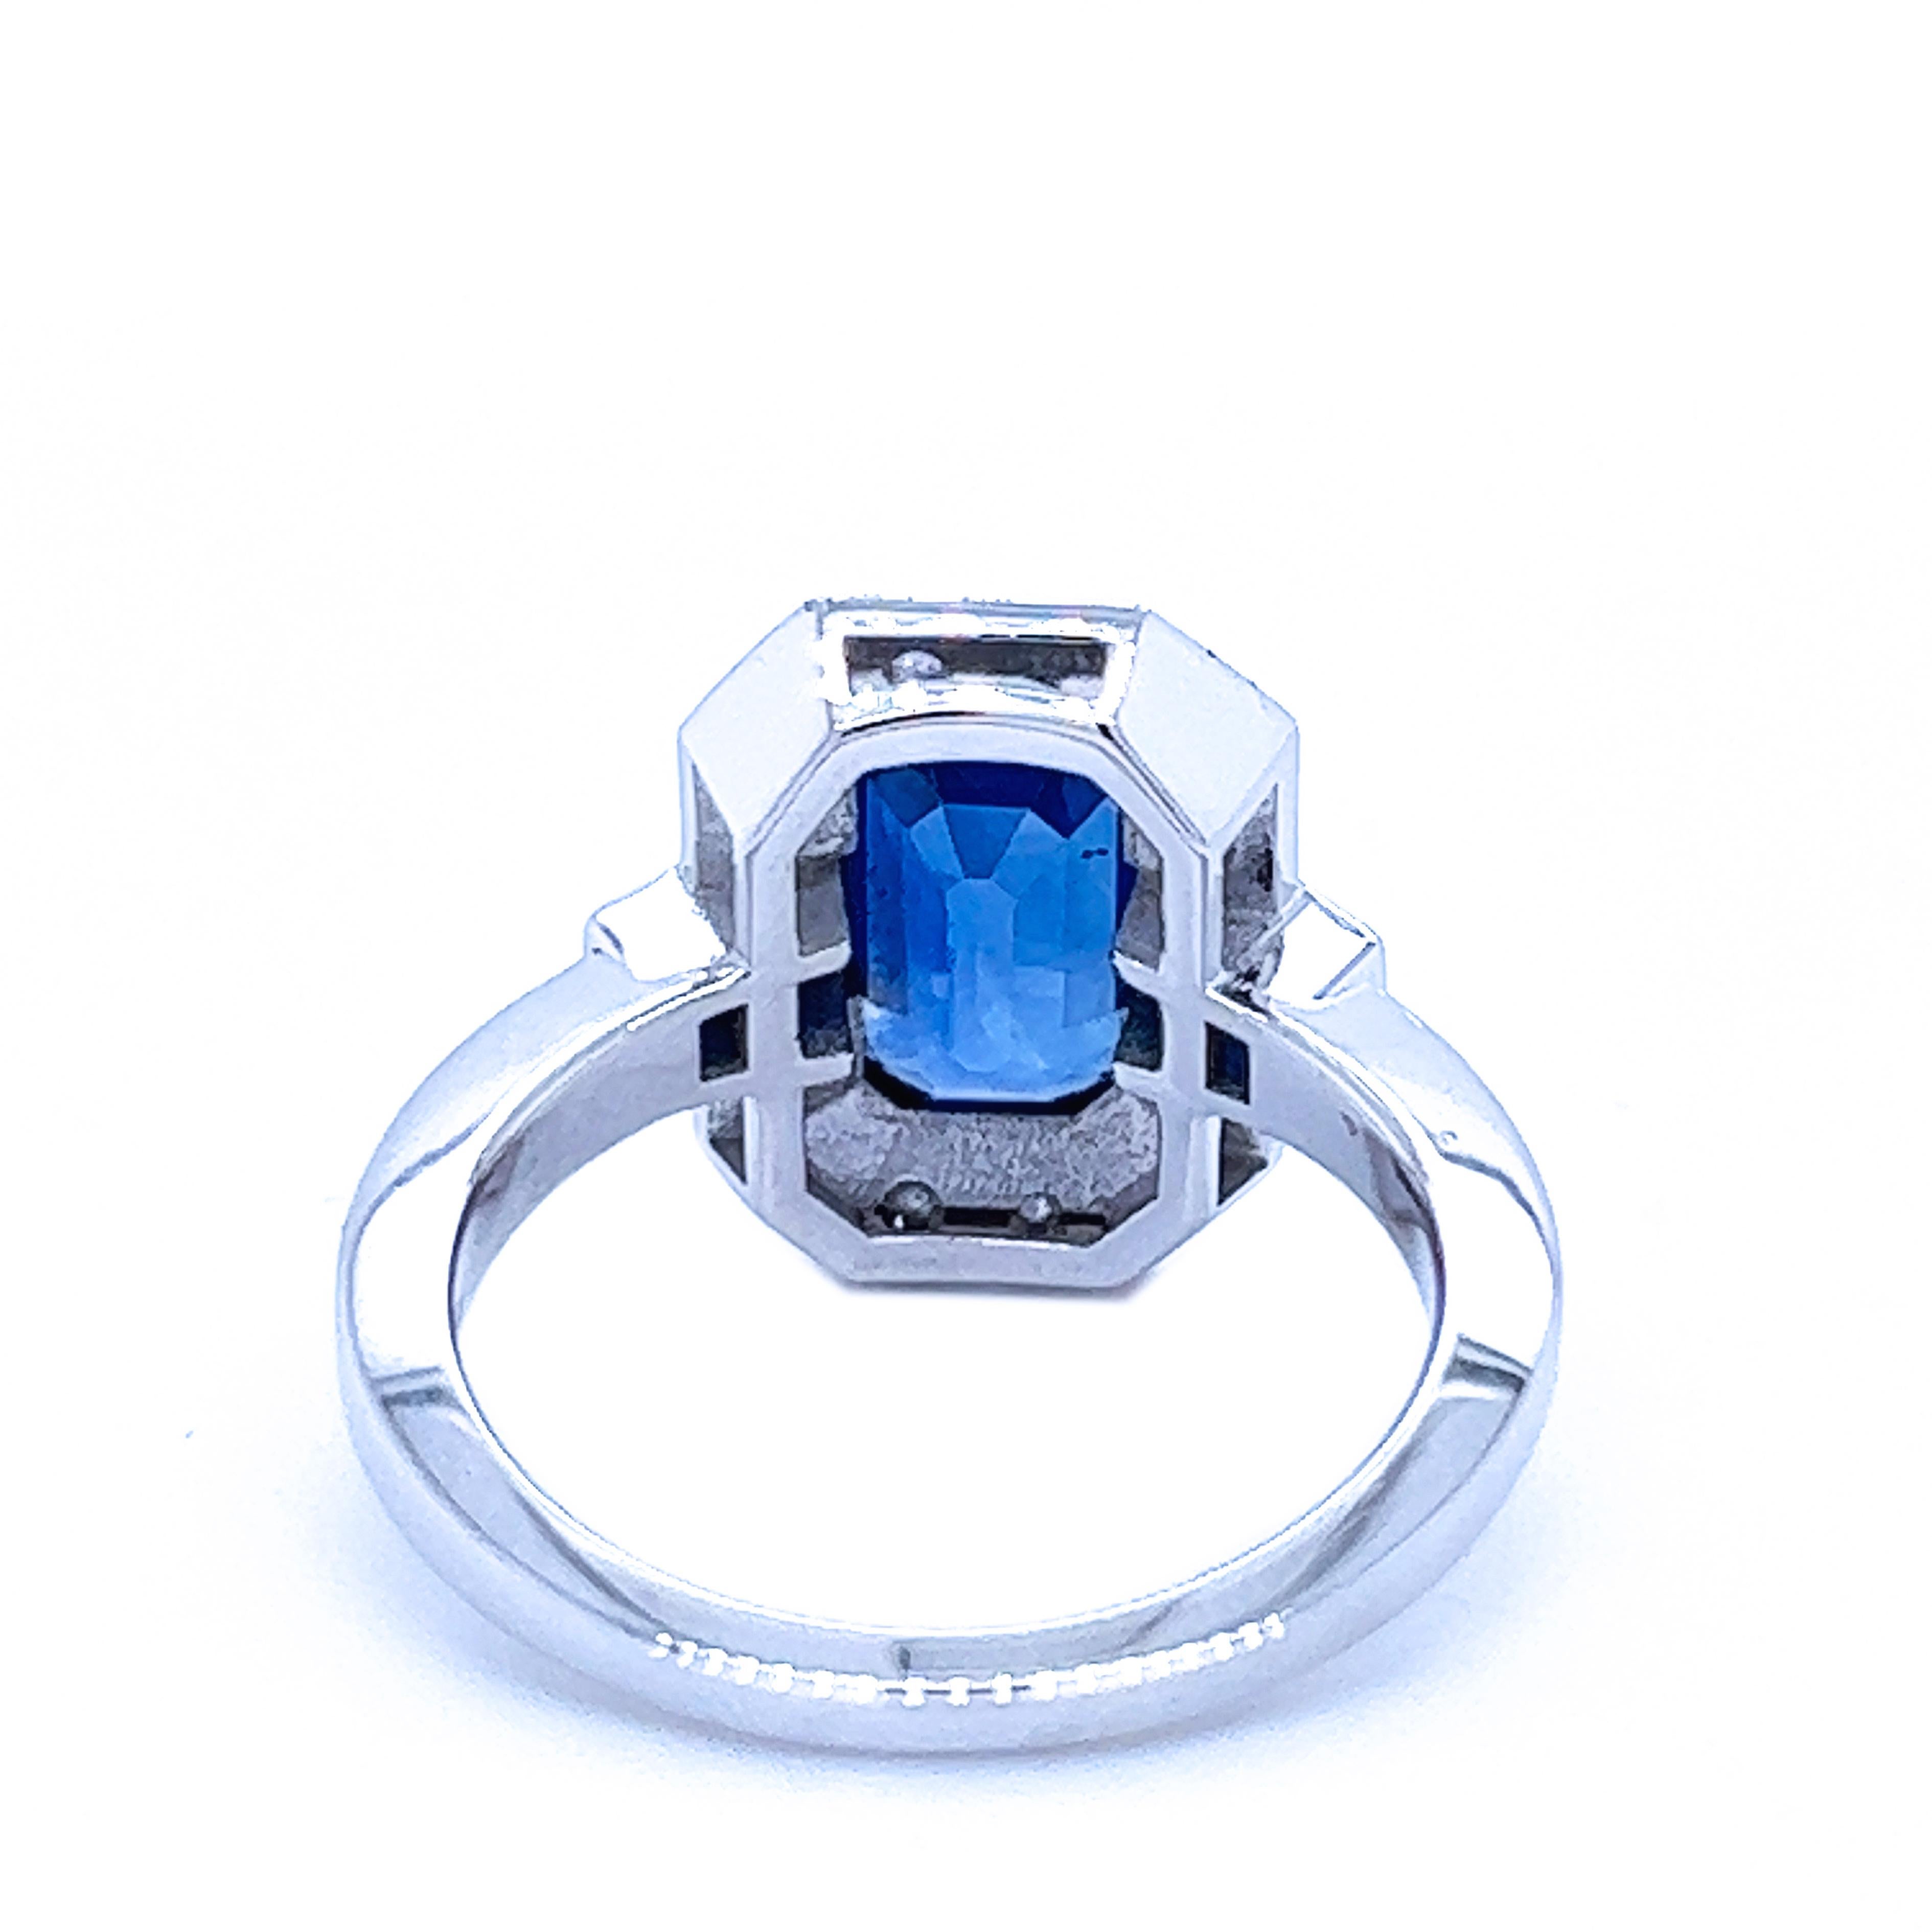 Contemporary Berca 3.17kt Igi Certified Royal Blue Sapphire Emerald Cut Diamond Ring For Sale